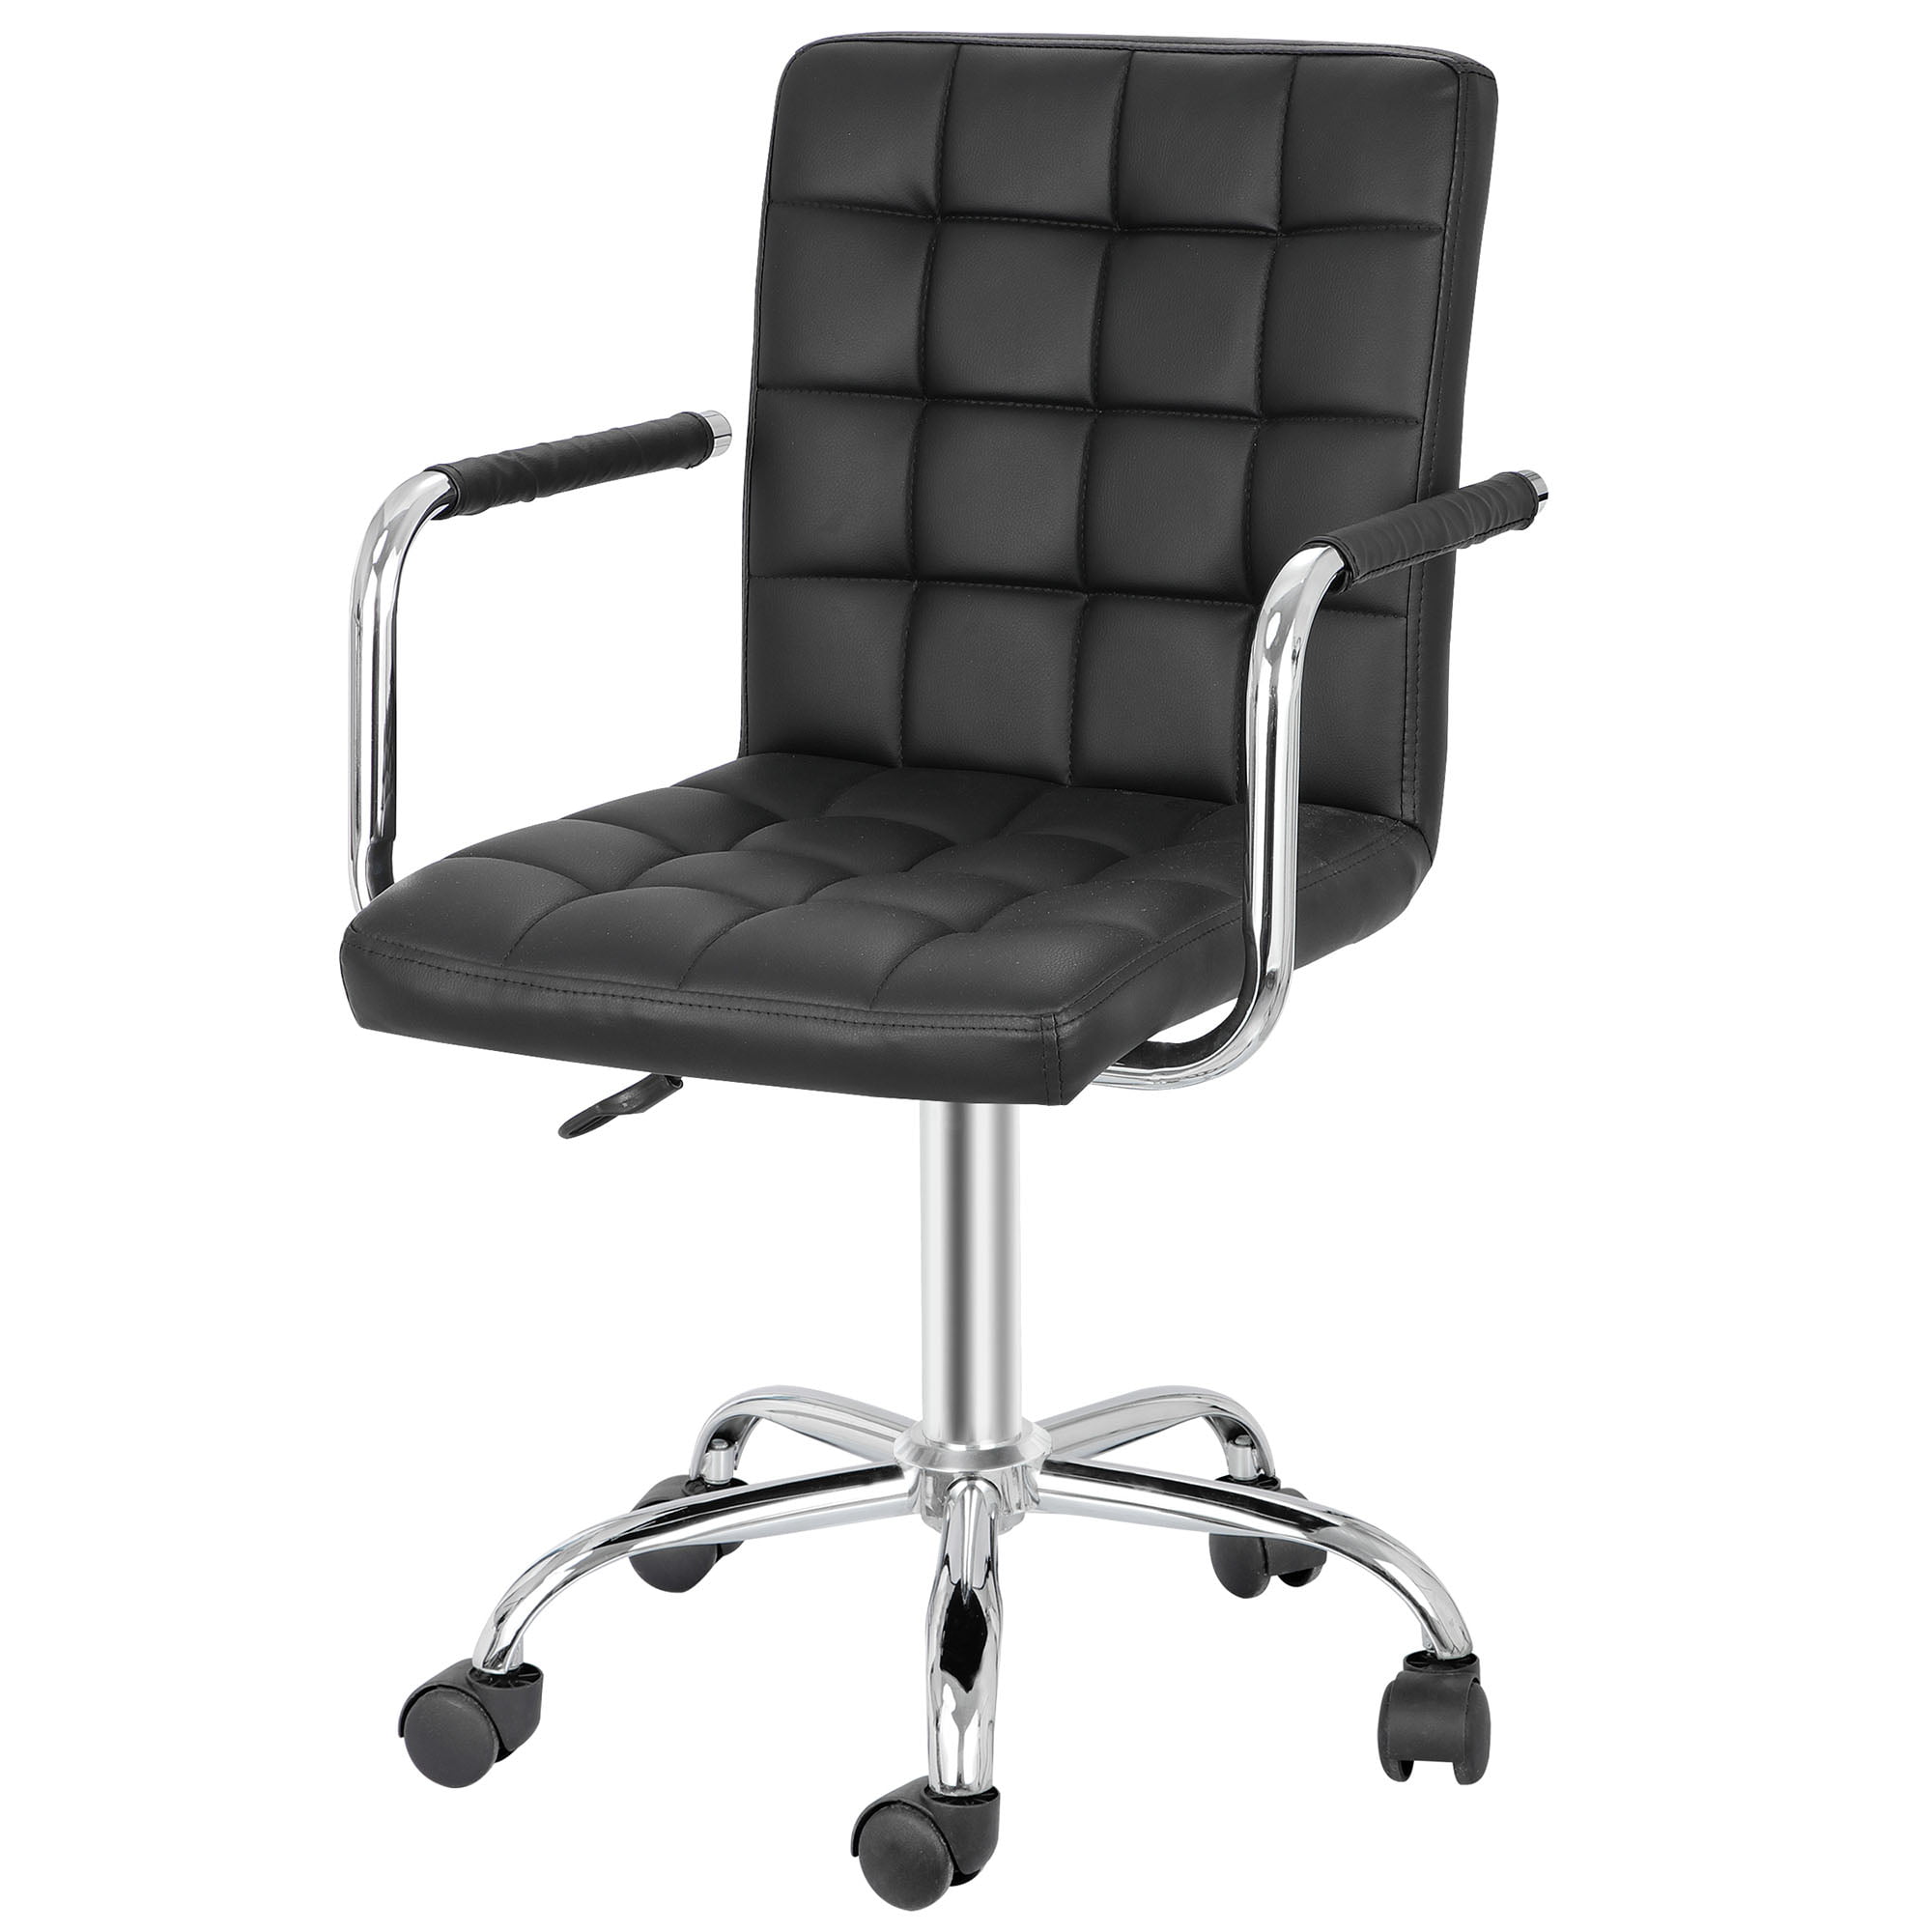 Ergonomic Office Computer Chair Adjustable Height 360 